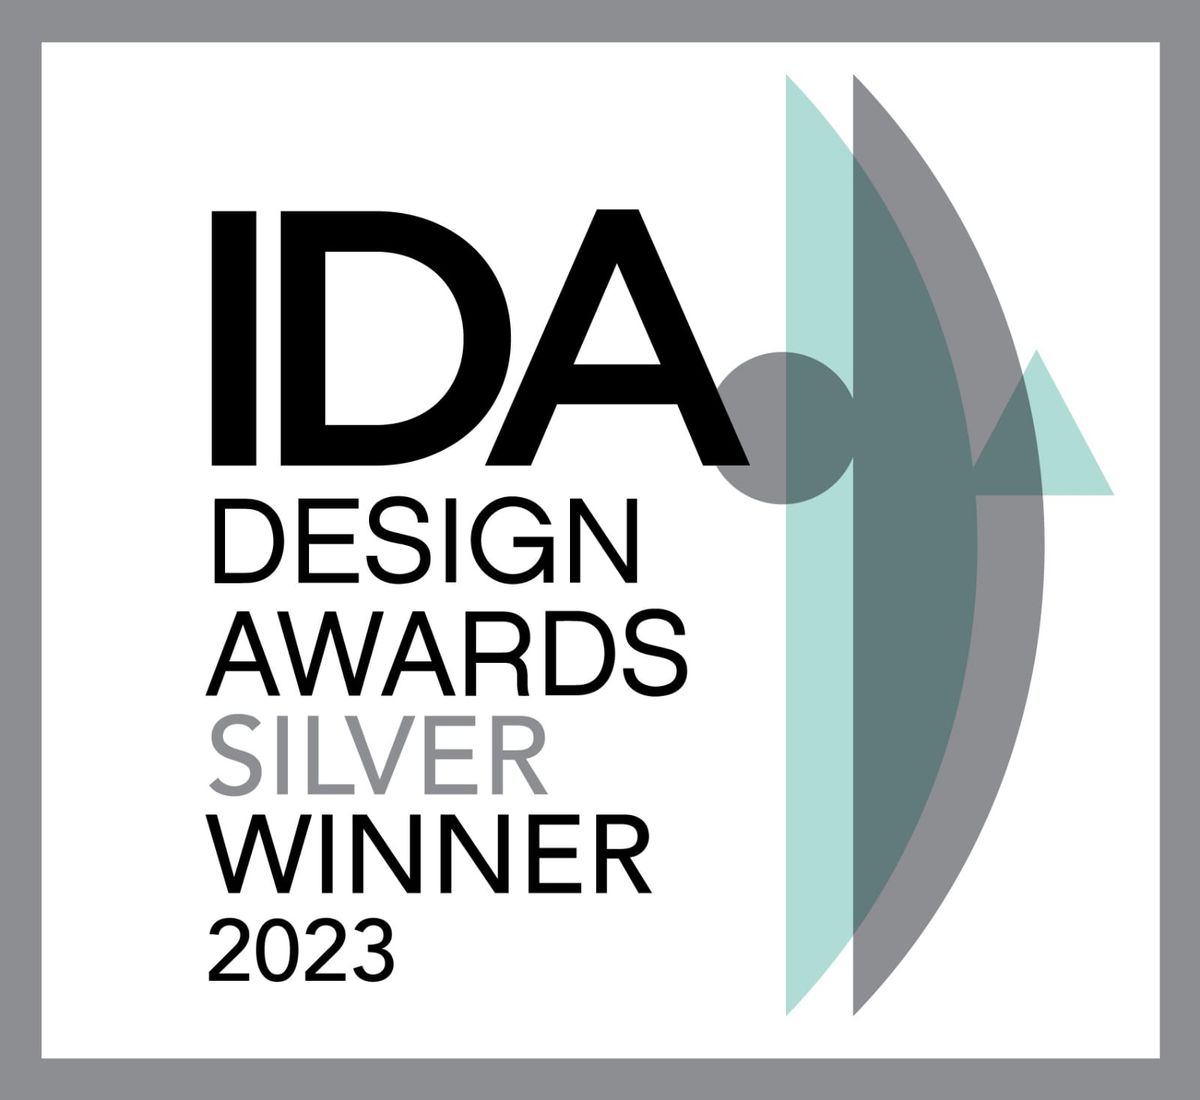 IDA；International Design Awards；國際獎項；美國；竣恩創意空間制作；室內設計；空間設計；住宅空間